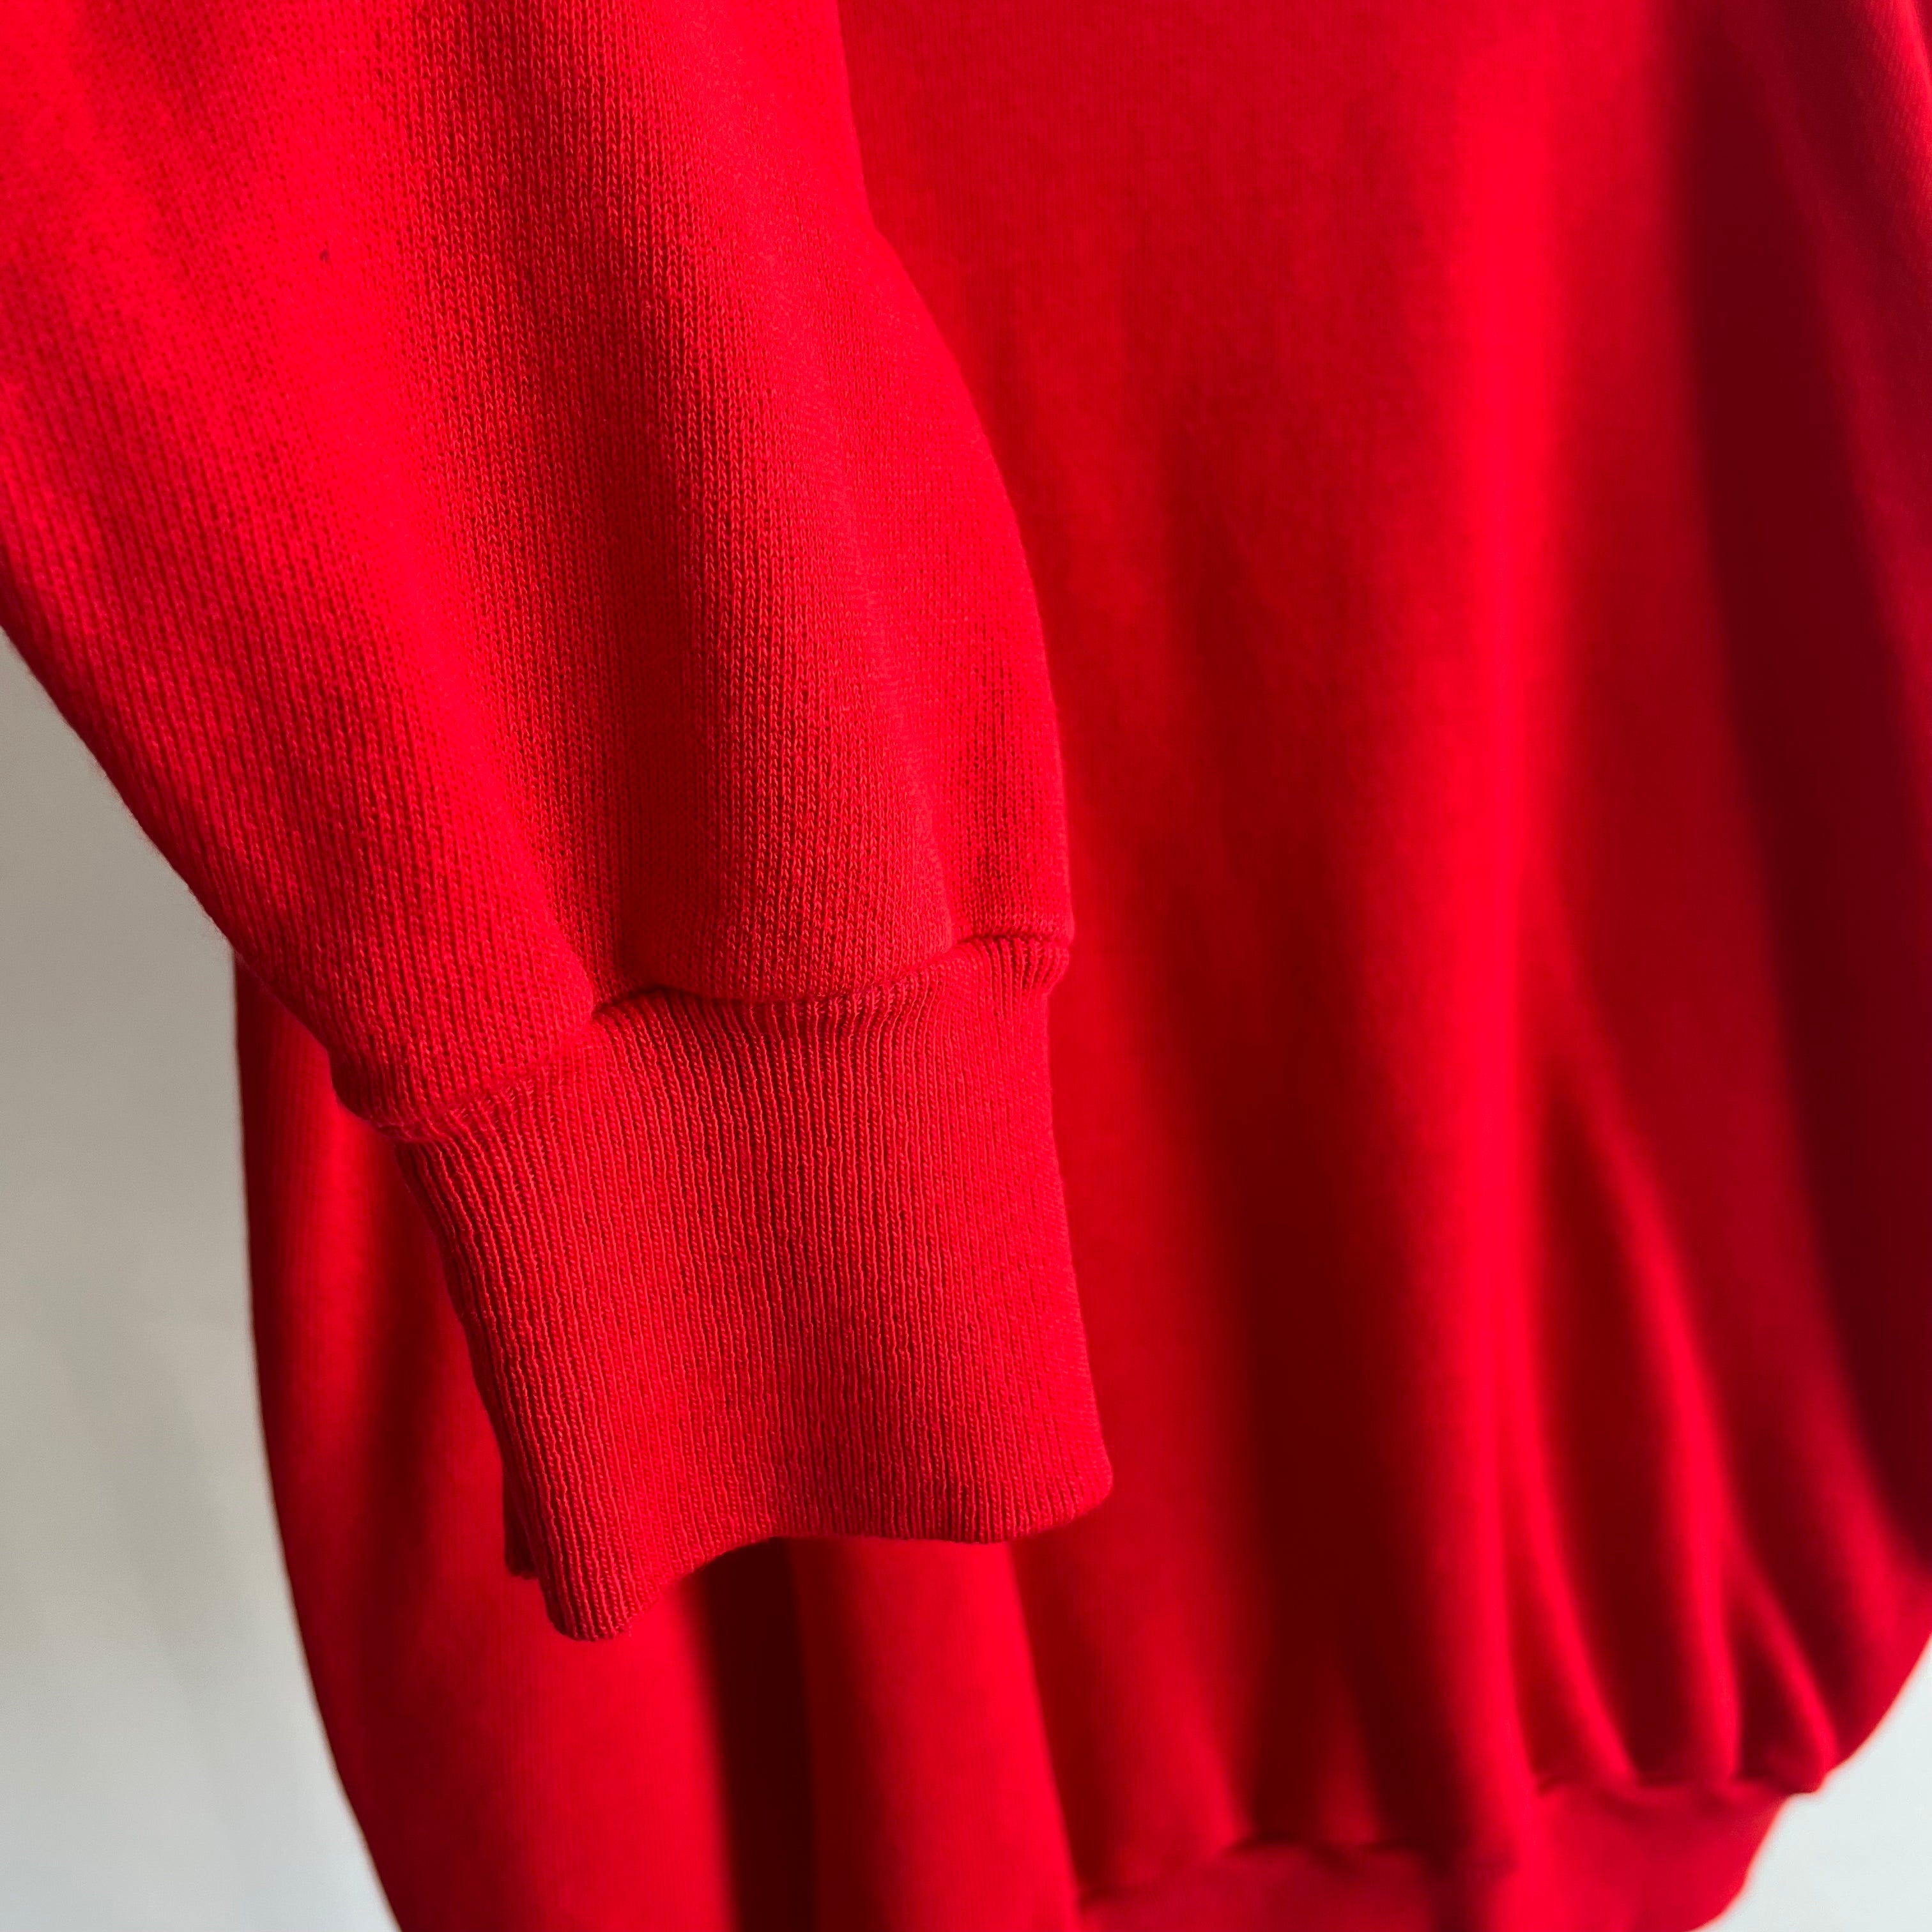 1980s Swoon Worthy Blank Red Sweatshirt